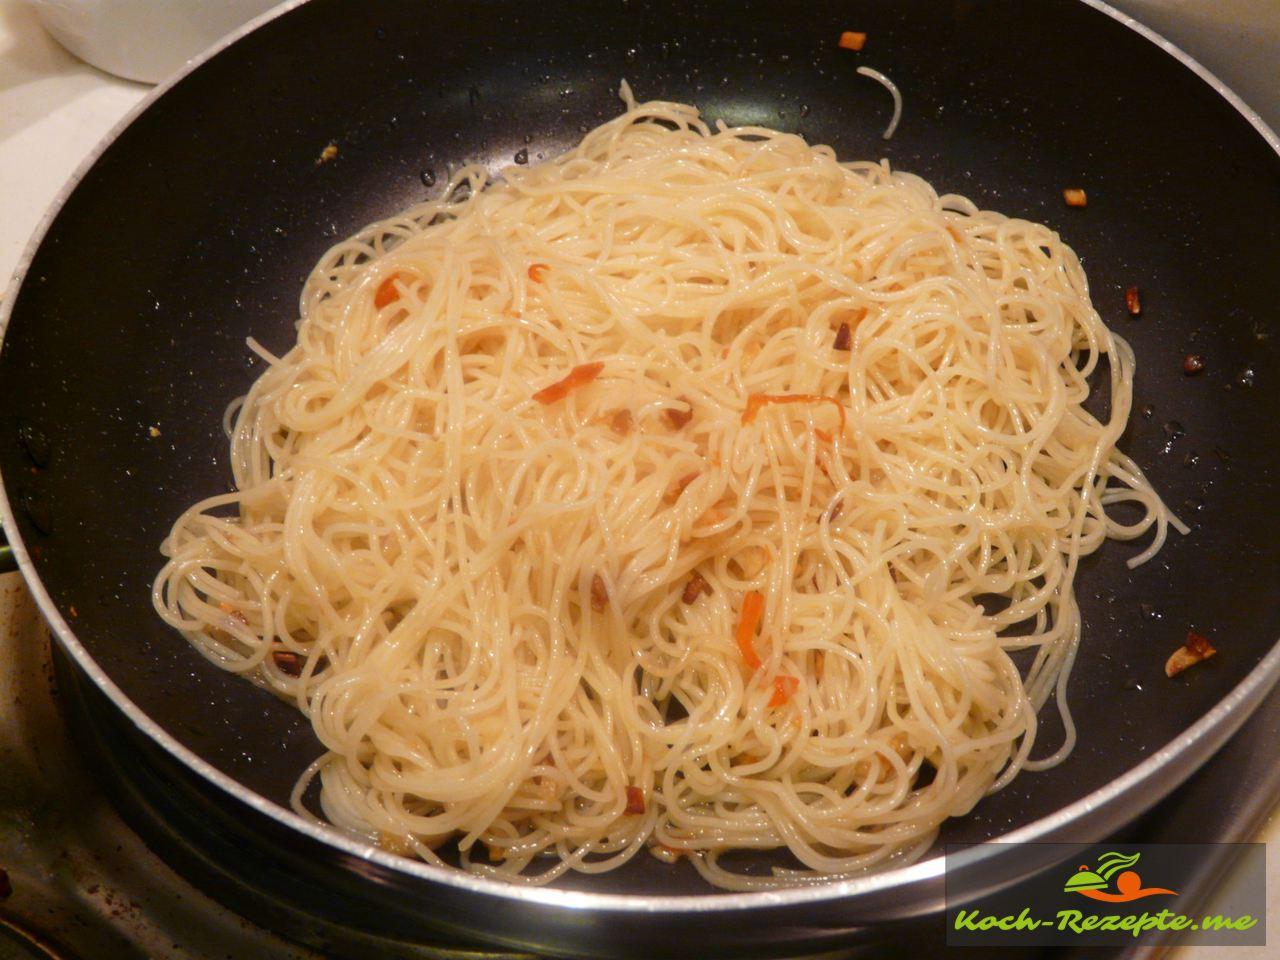 Knoblauch-Chili Spaghetti l in Öl Spezialität lecker kochen